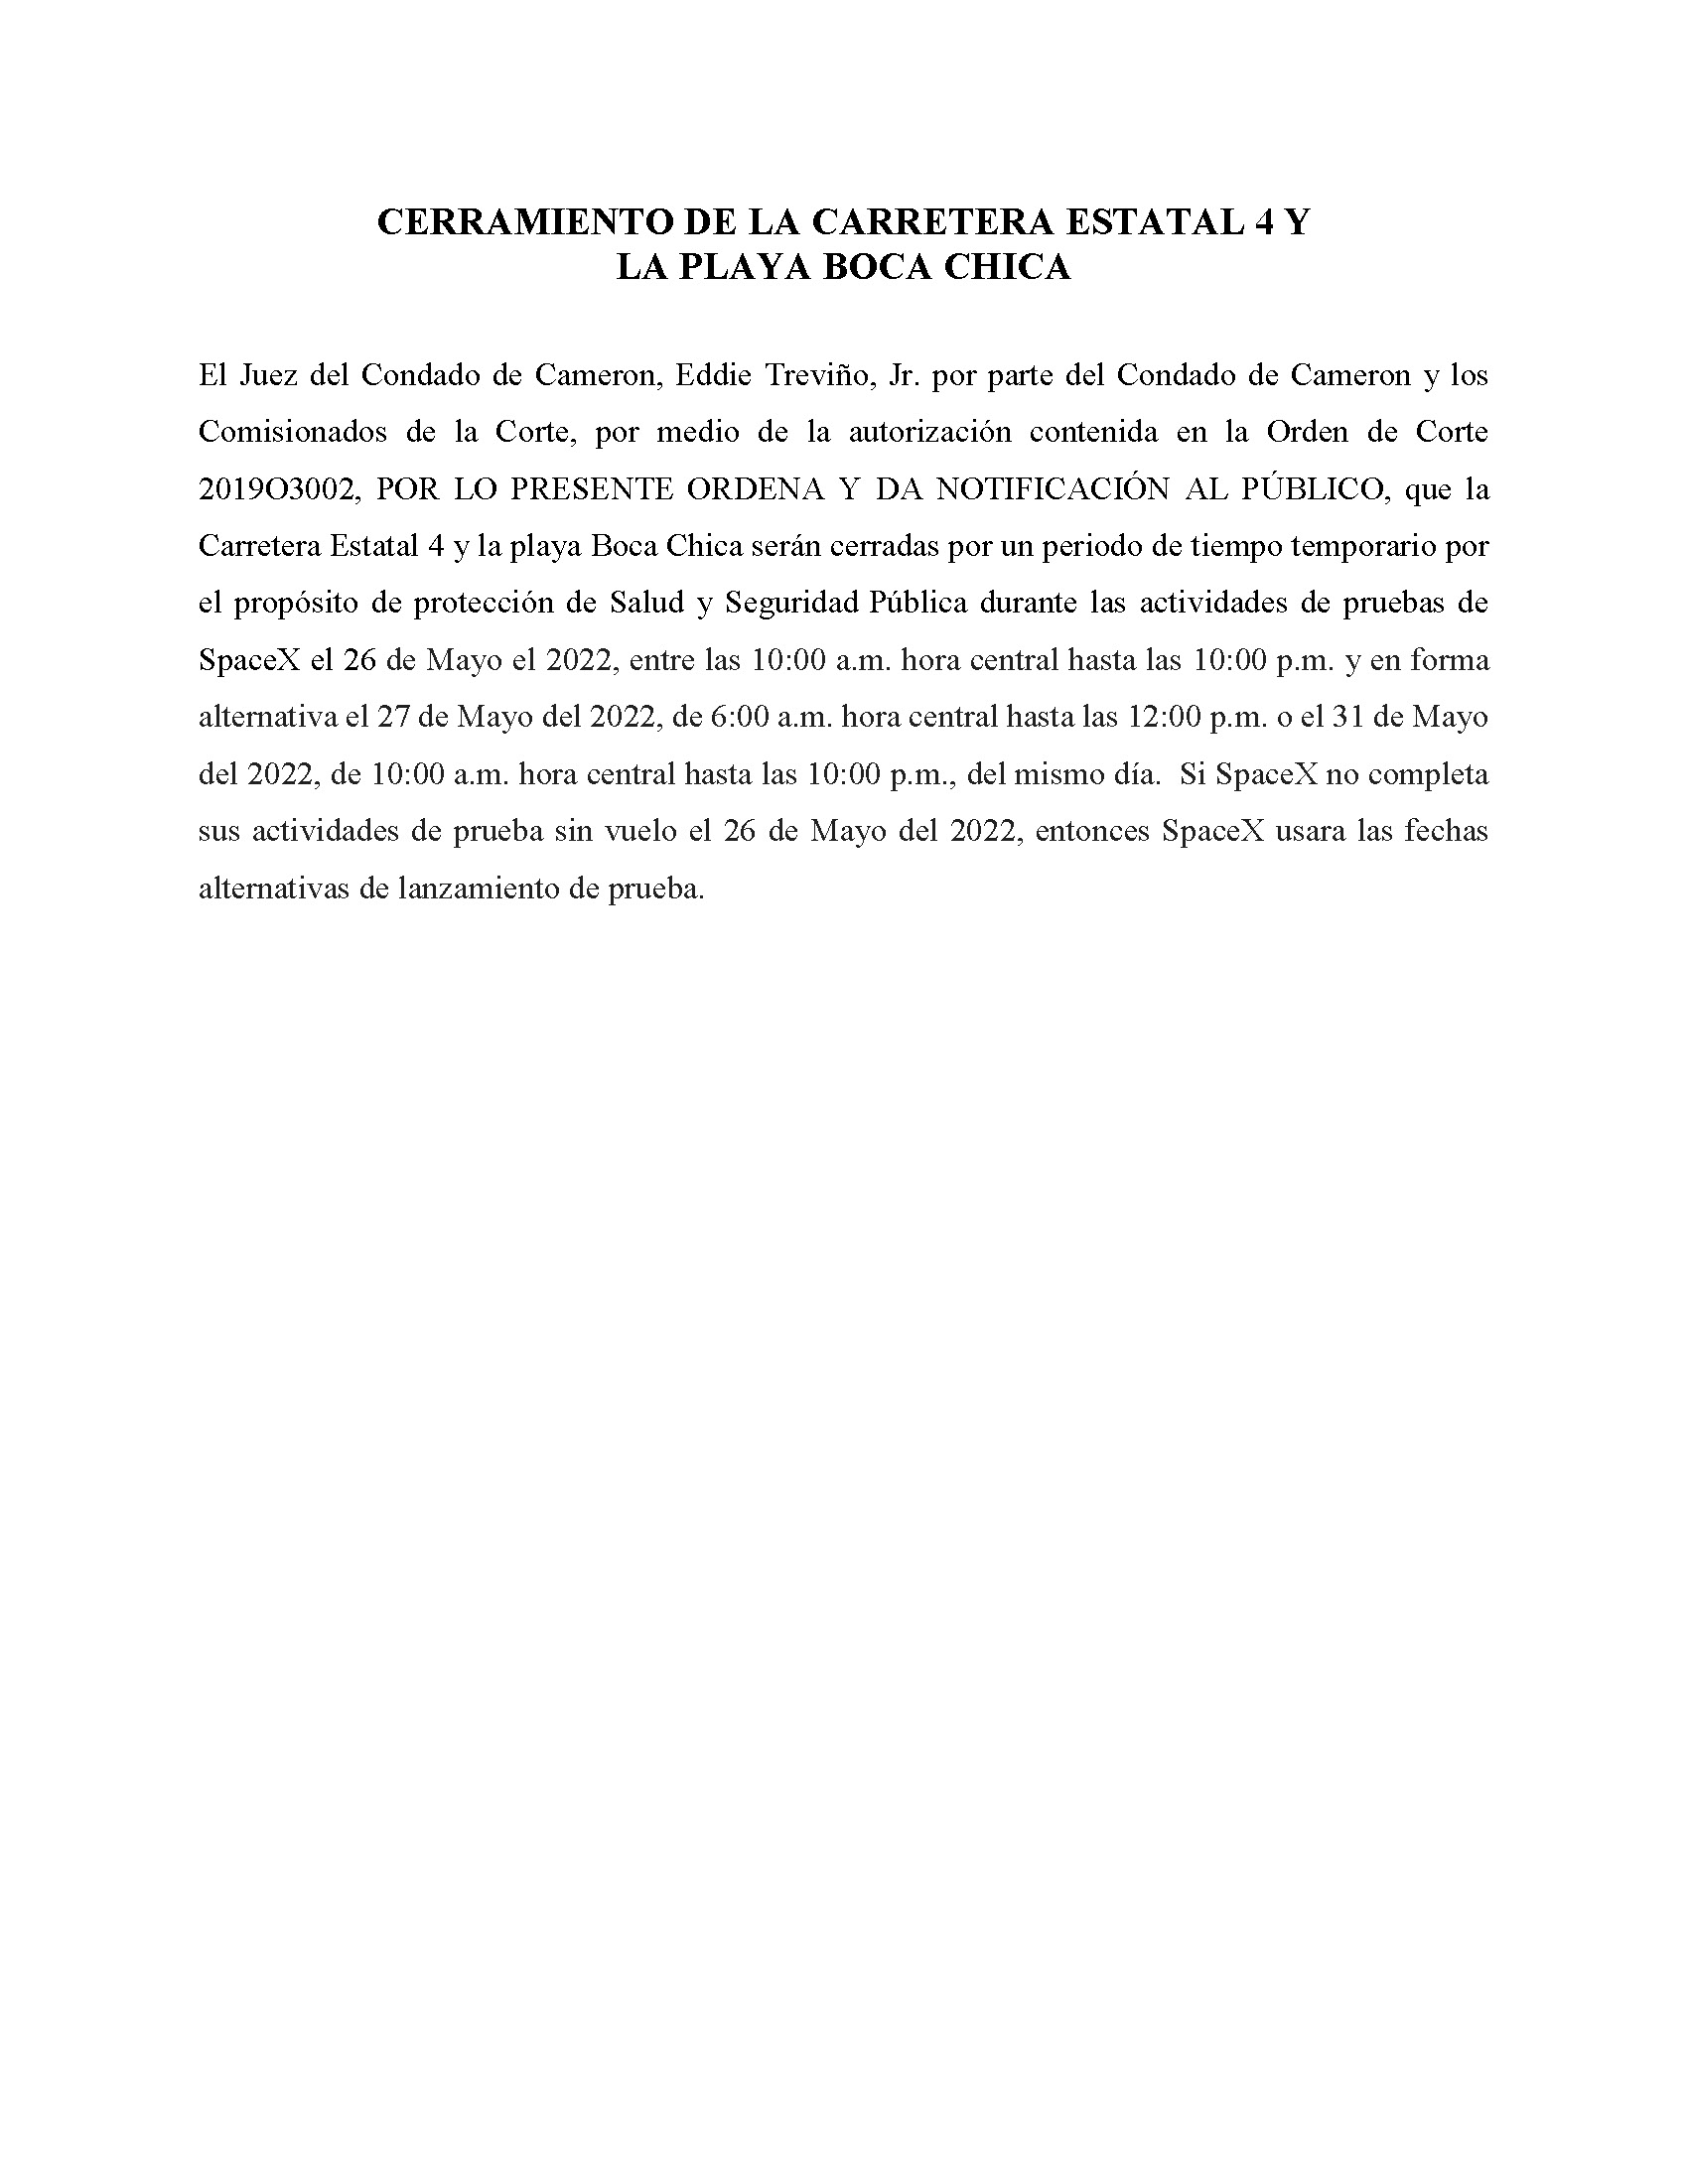 ORDER.CLOSURE OF HIGHWAY 4 Y LA PLAYA BOCA CHICA.SPANISH.05.26.2022